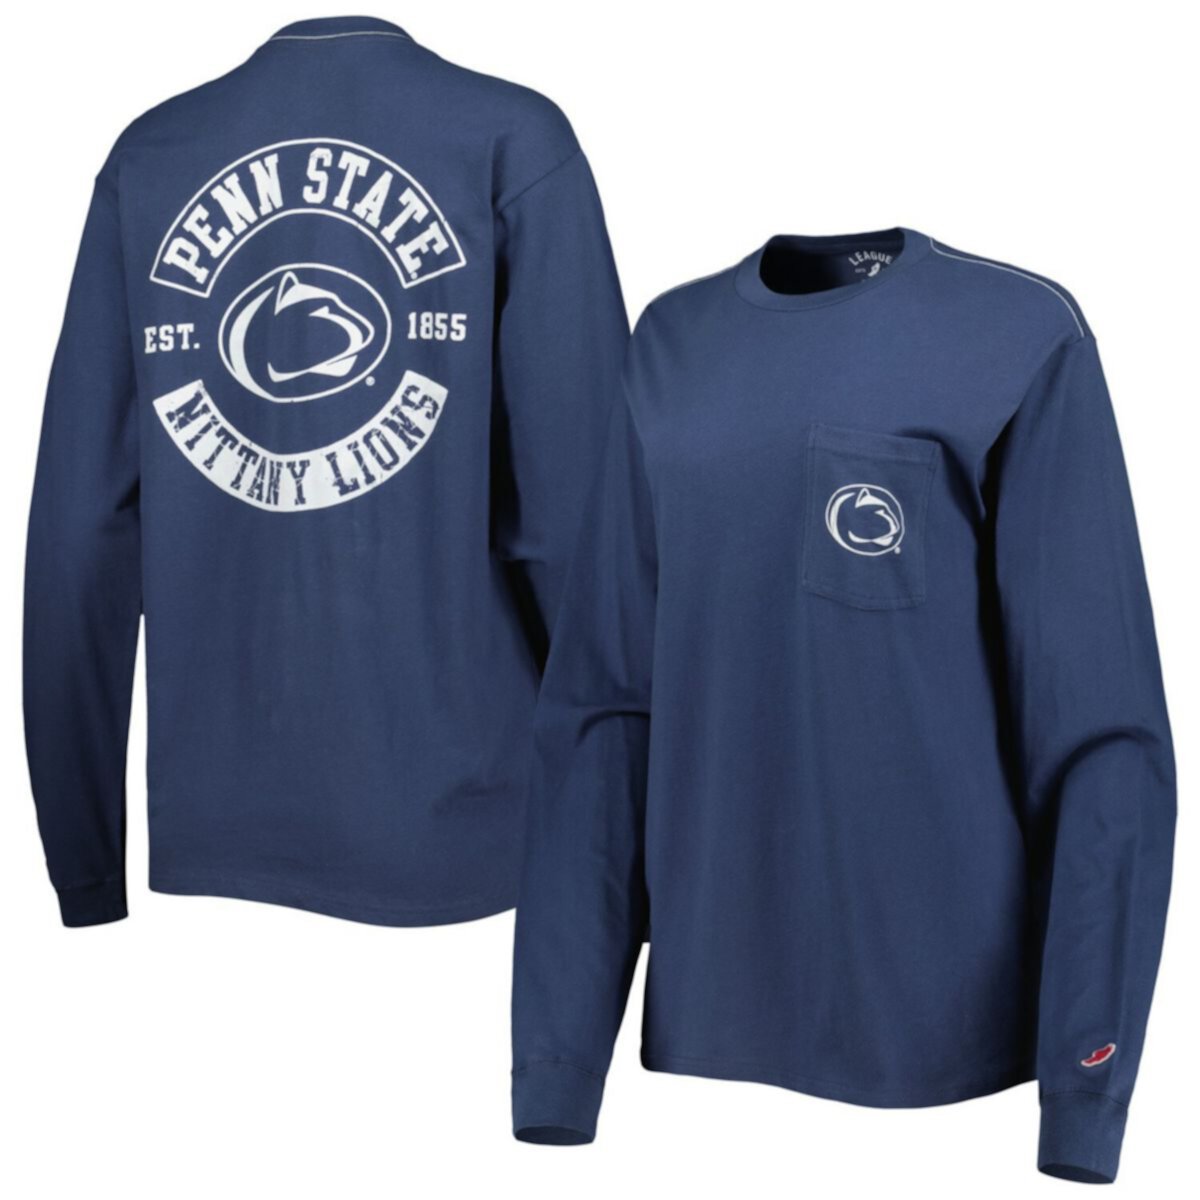 Women's League Collegiate Wear Темно-синяя футболка Penn State Nittany Lions с длинными рукавами и большими карманами League Collegiate Wear